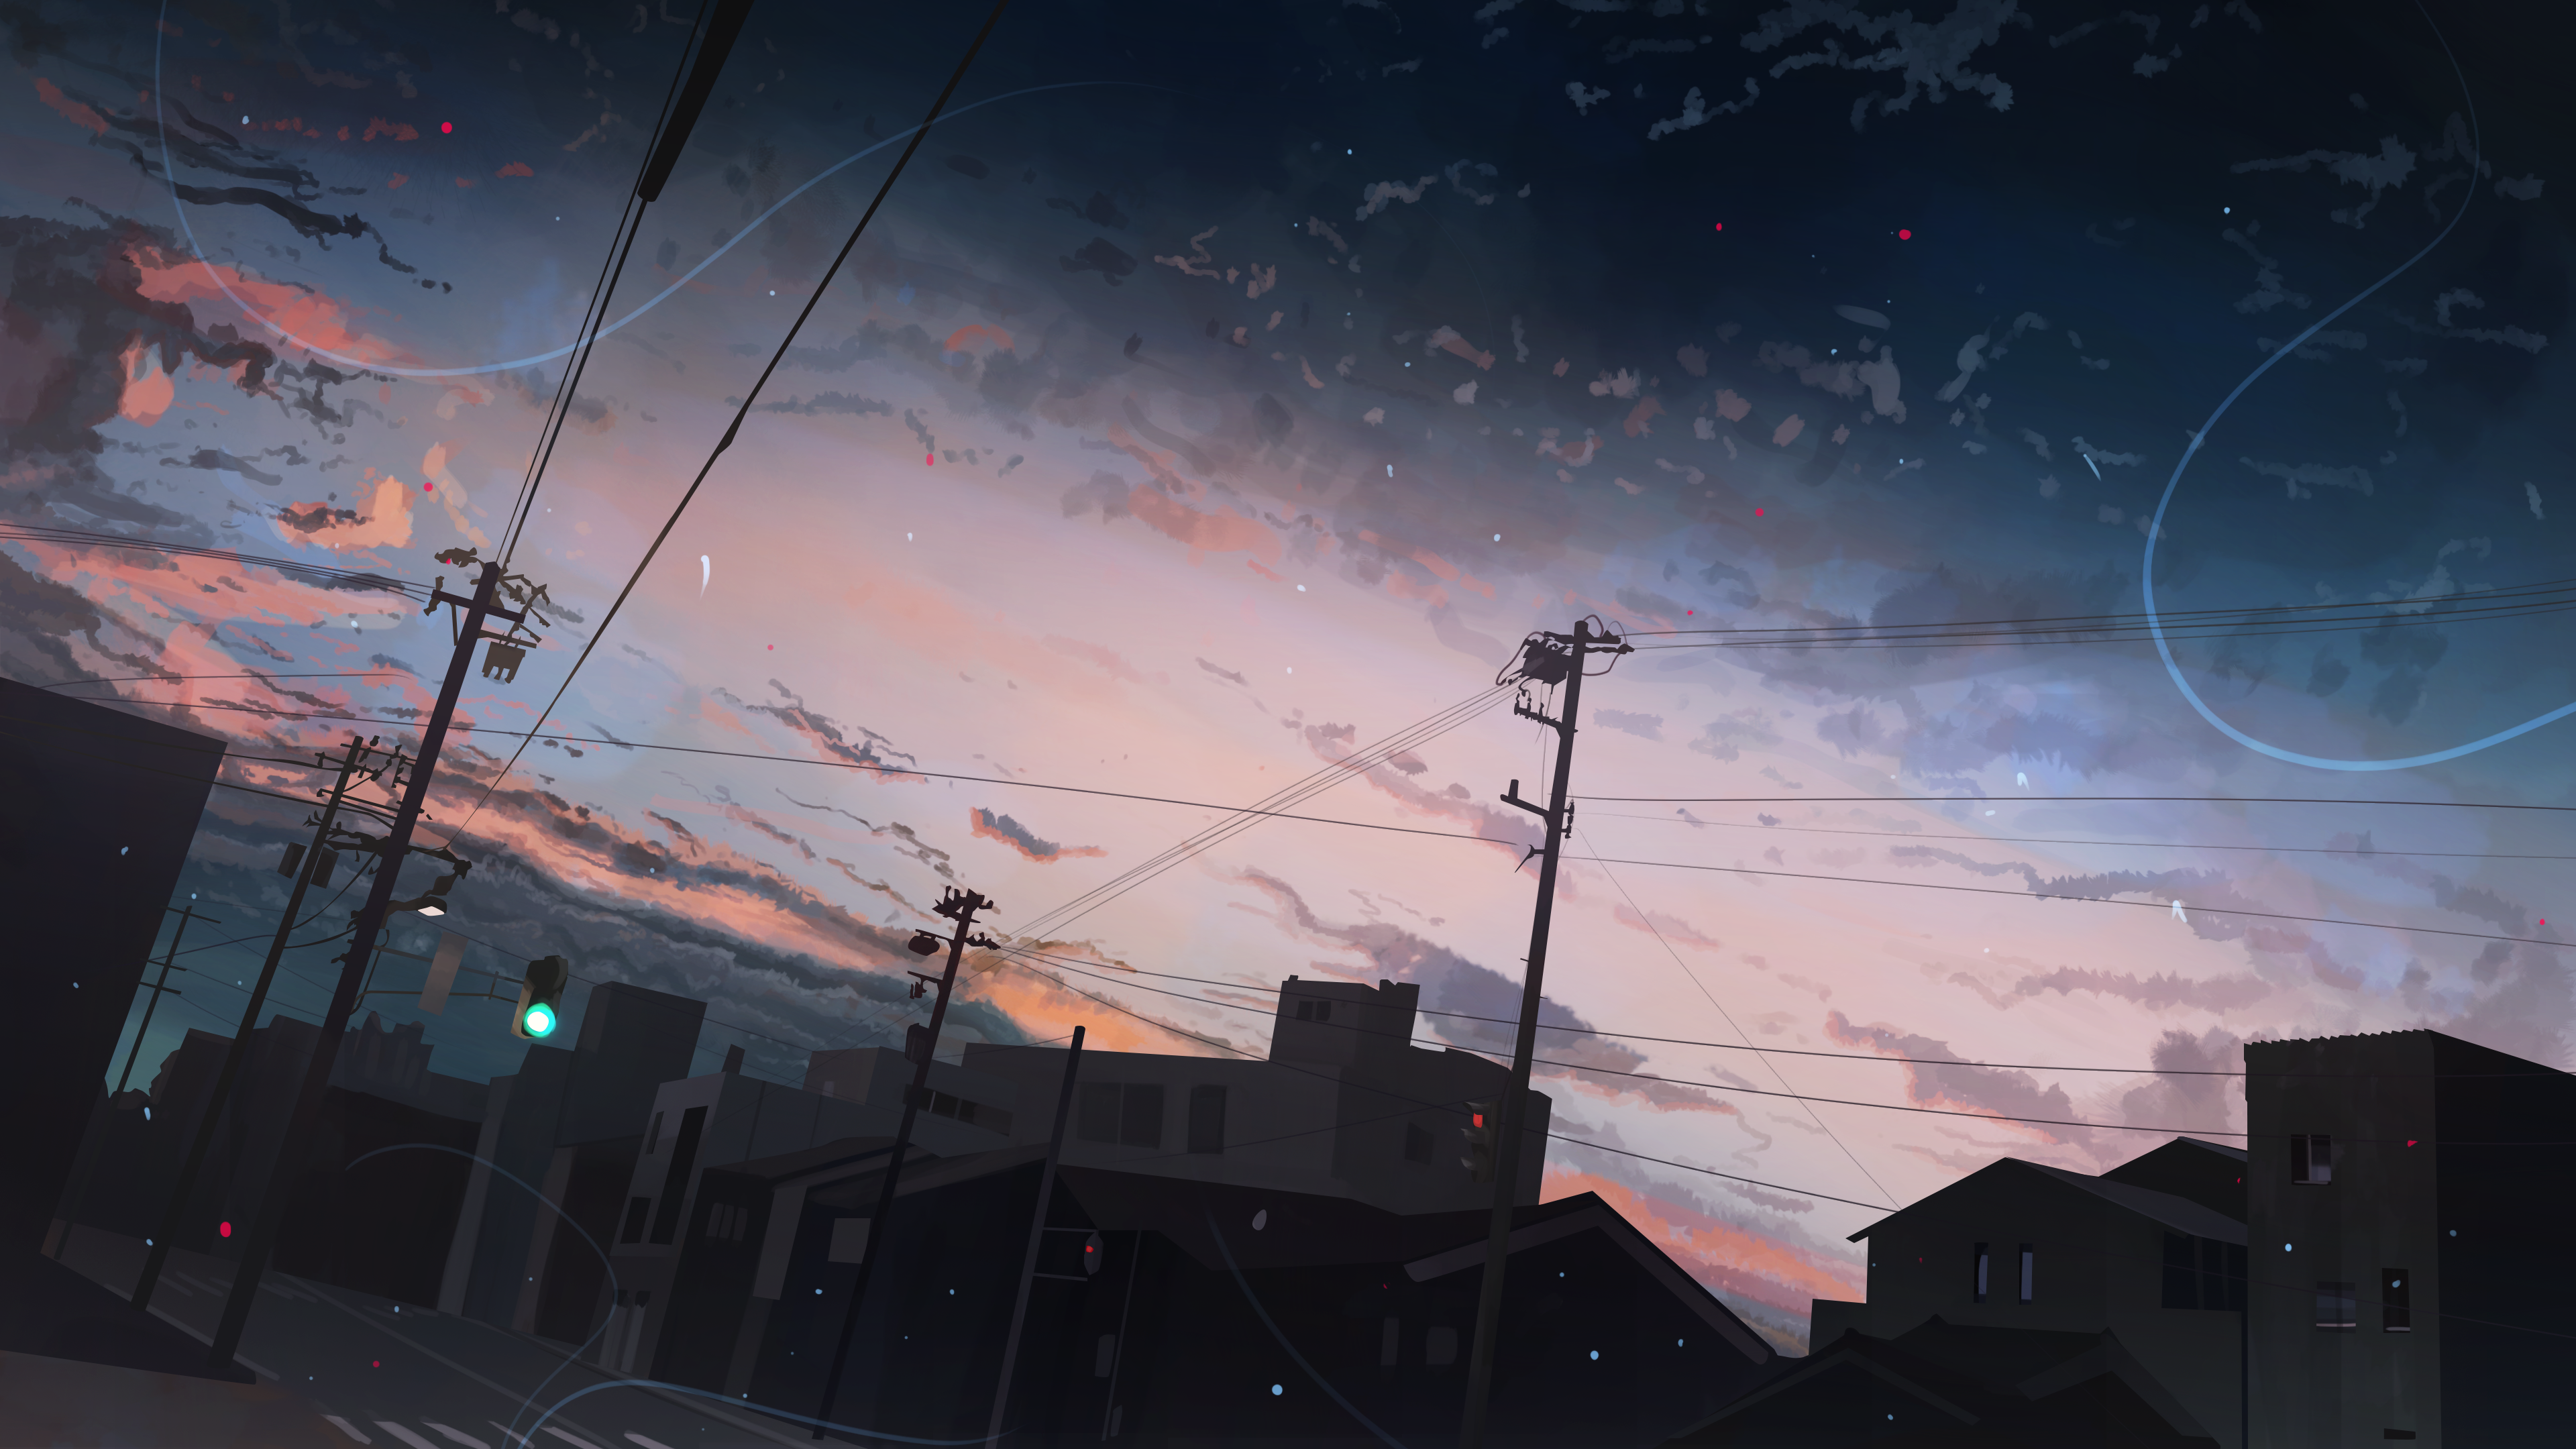 Anime 3840x2160 Pixiv artwork street sunset wires clouds traffic lights building sky city evening sunset glow Banishment